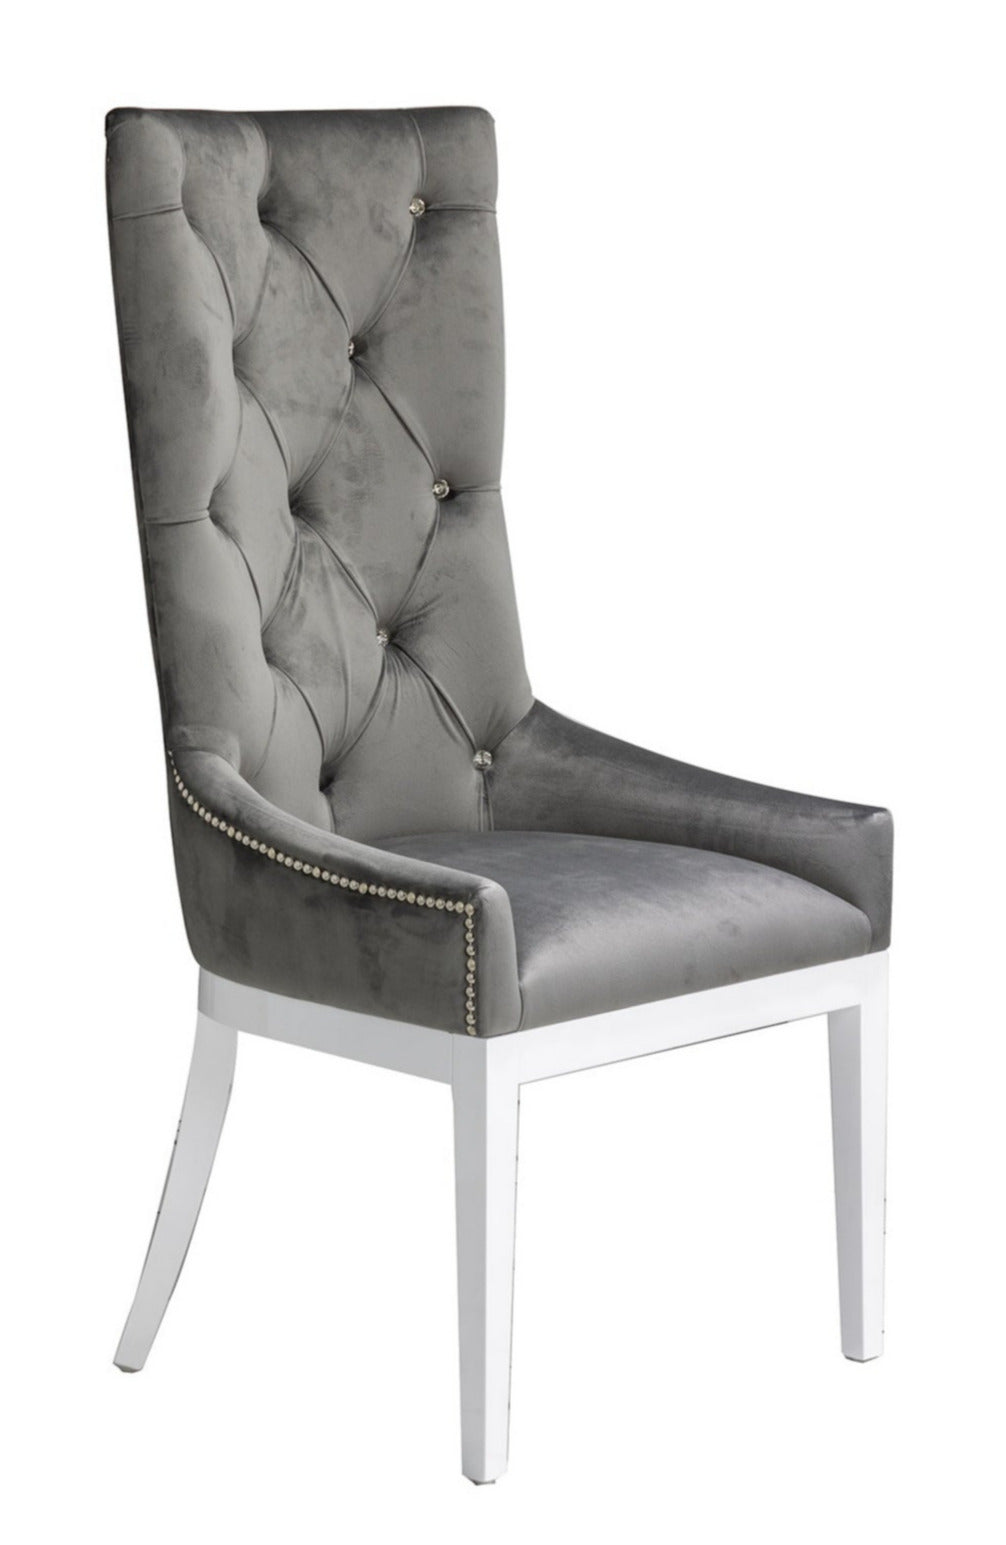 High back dining chair in dark grey velvet with swarovski crystal buttons